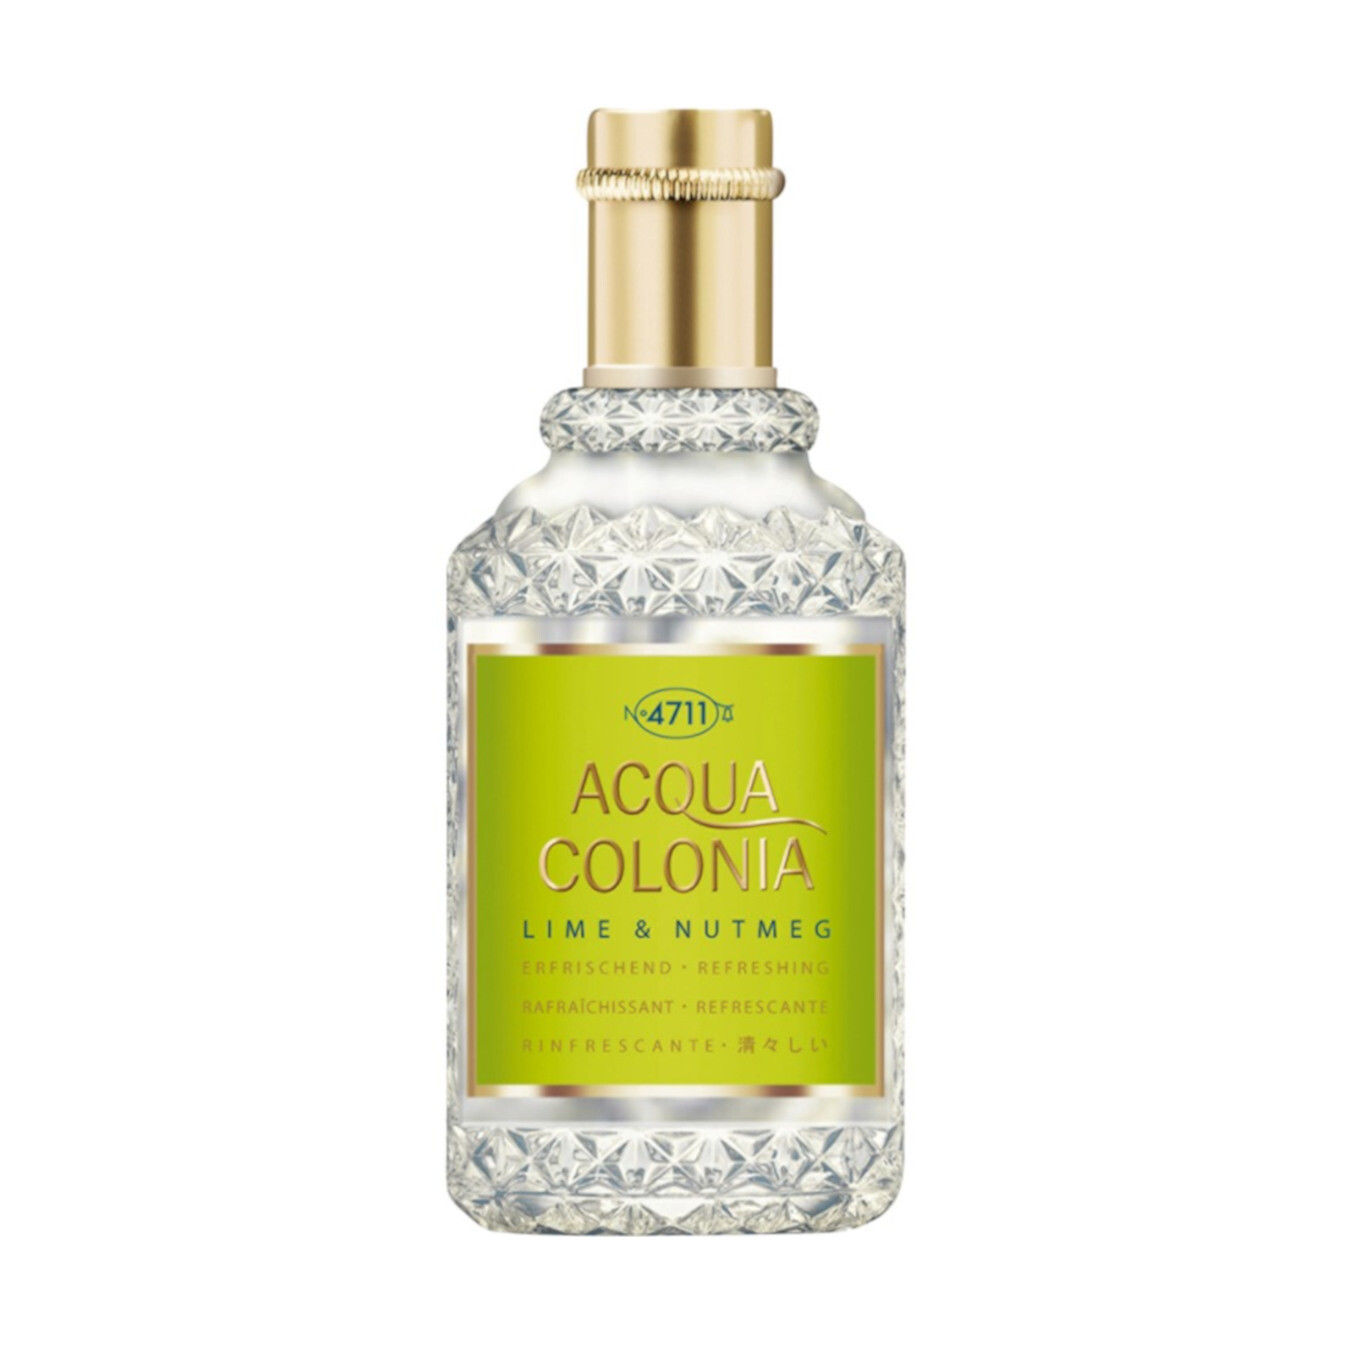 4711 Acqua Colonia Lime & Nutmeg Spritzen & Sprühen Damenparfum 100 ml